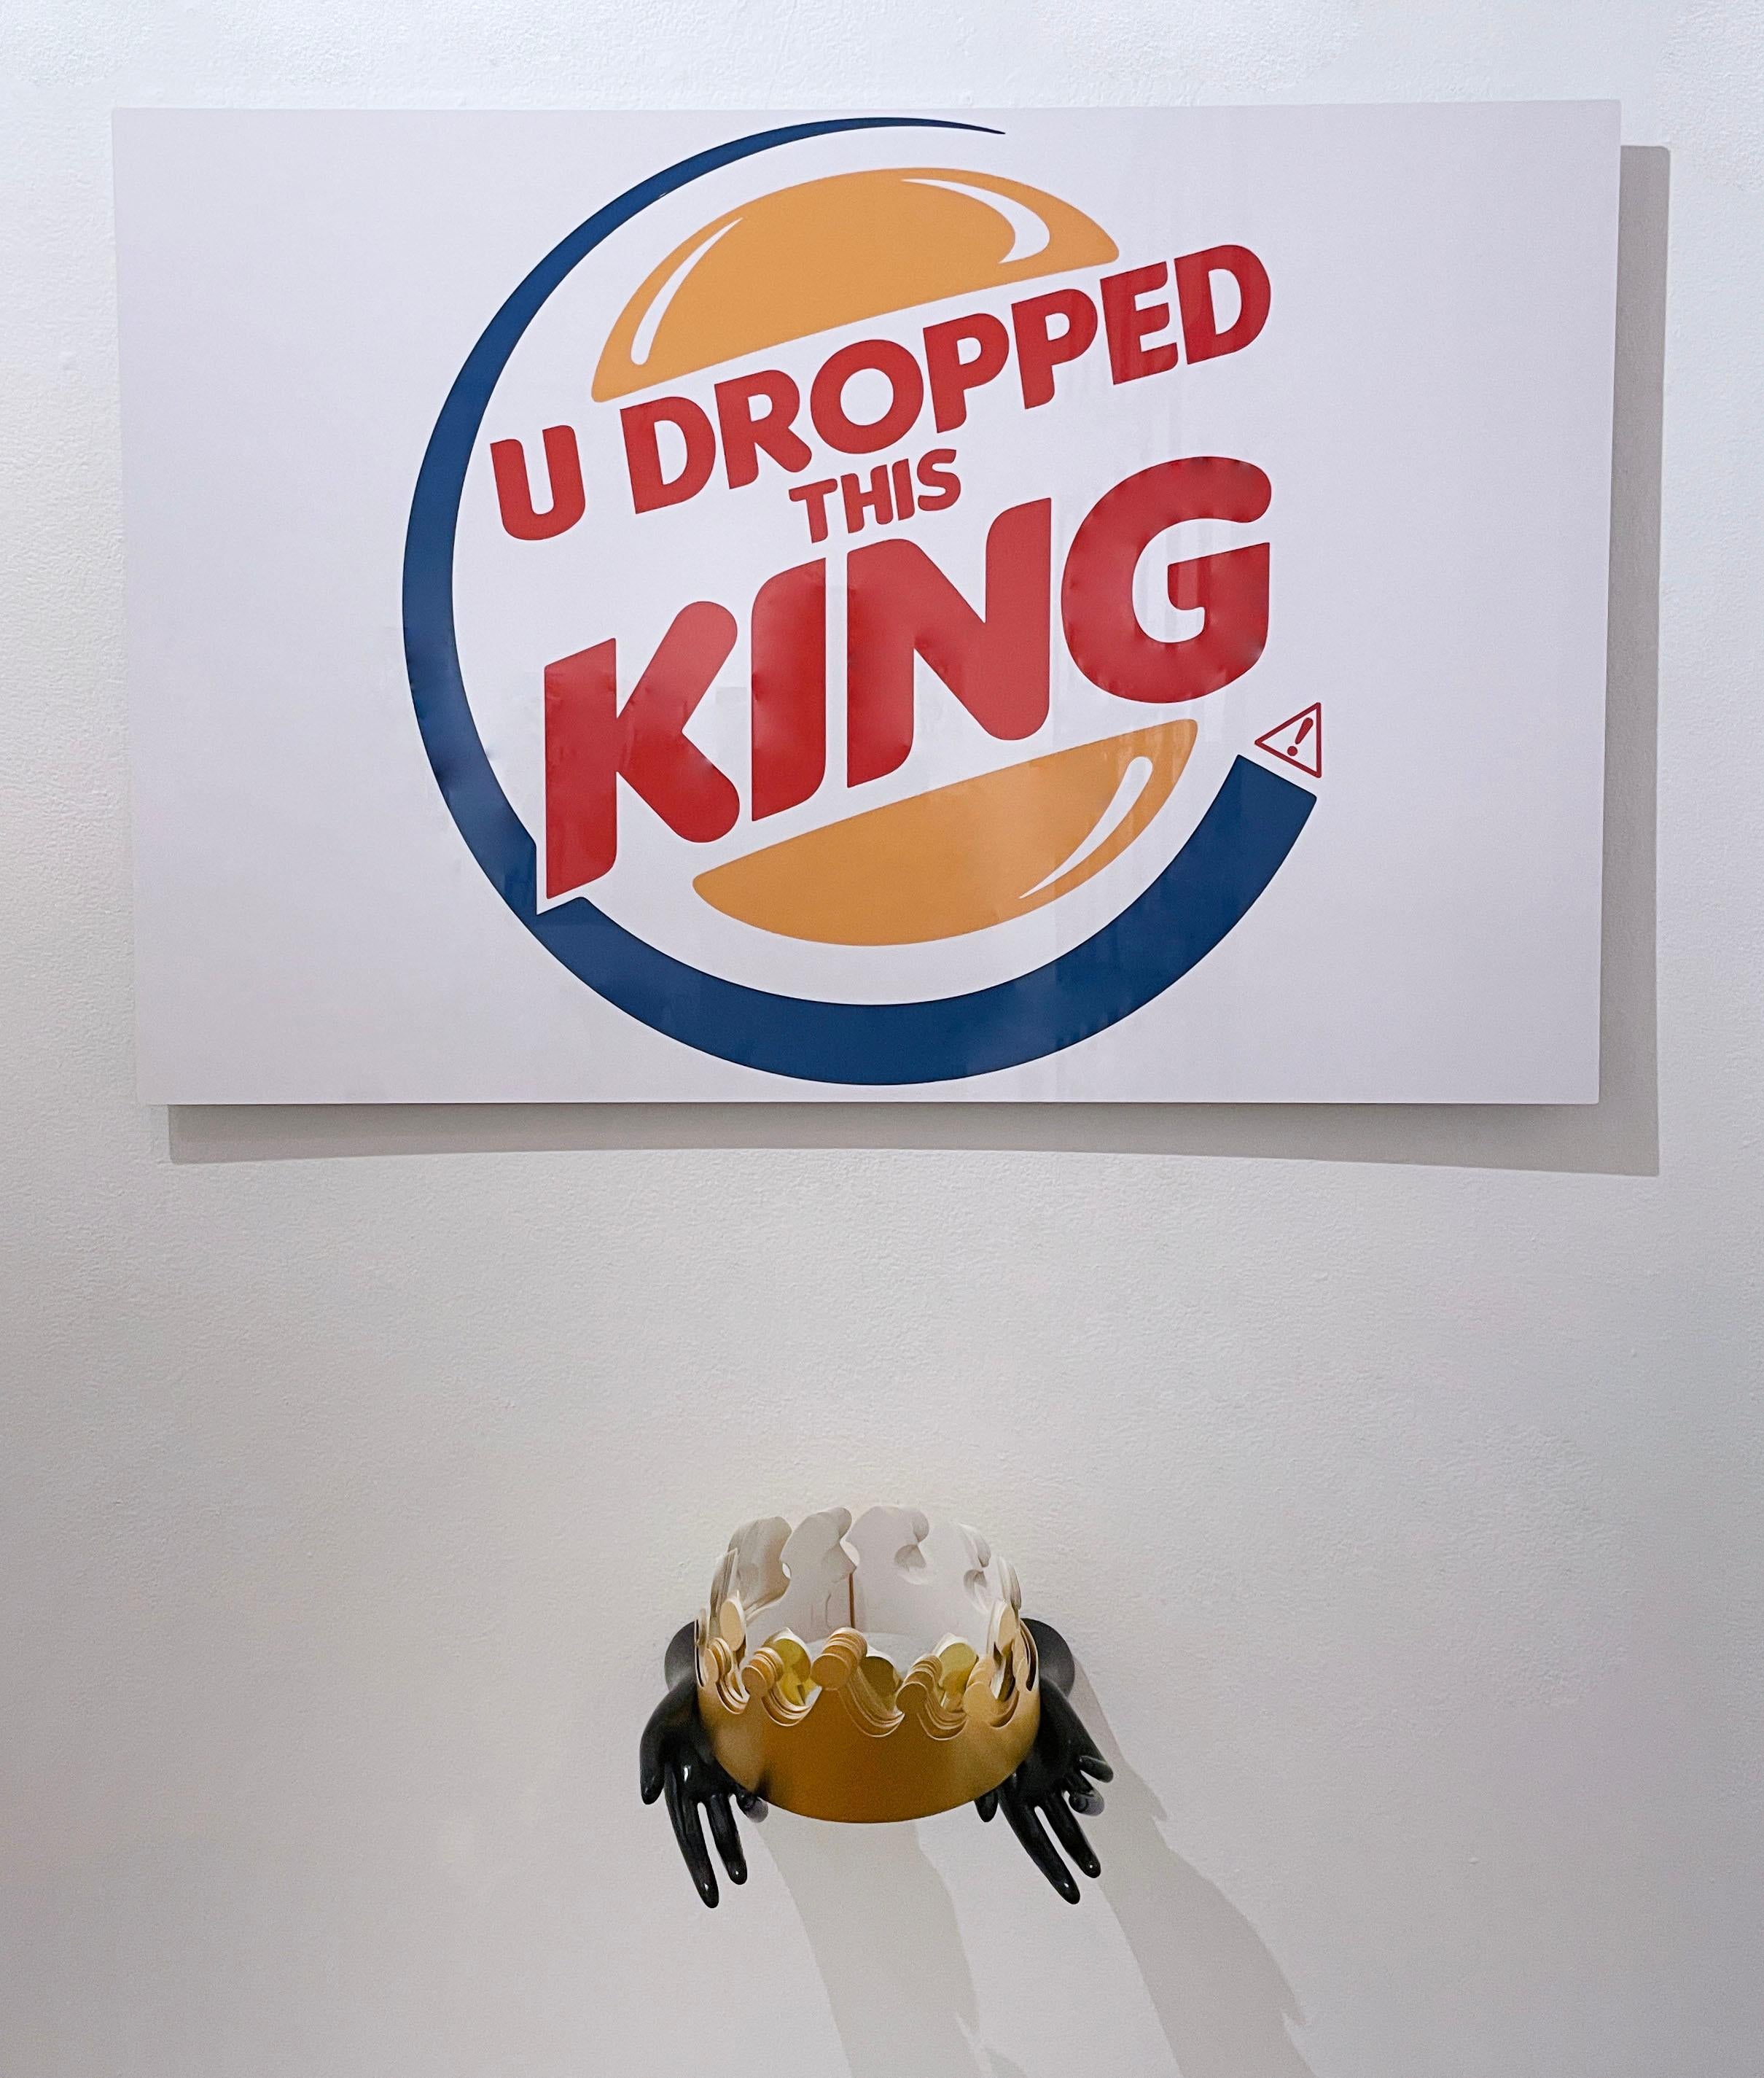 U Dropped This King (2022) par Kid Hazo, installation d'enseignes, art graphique, texte